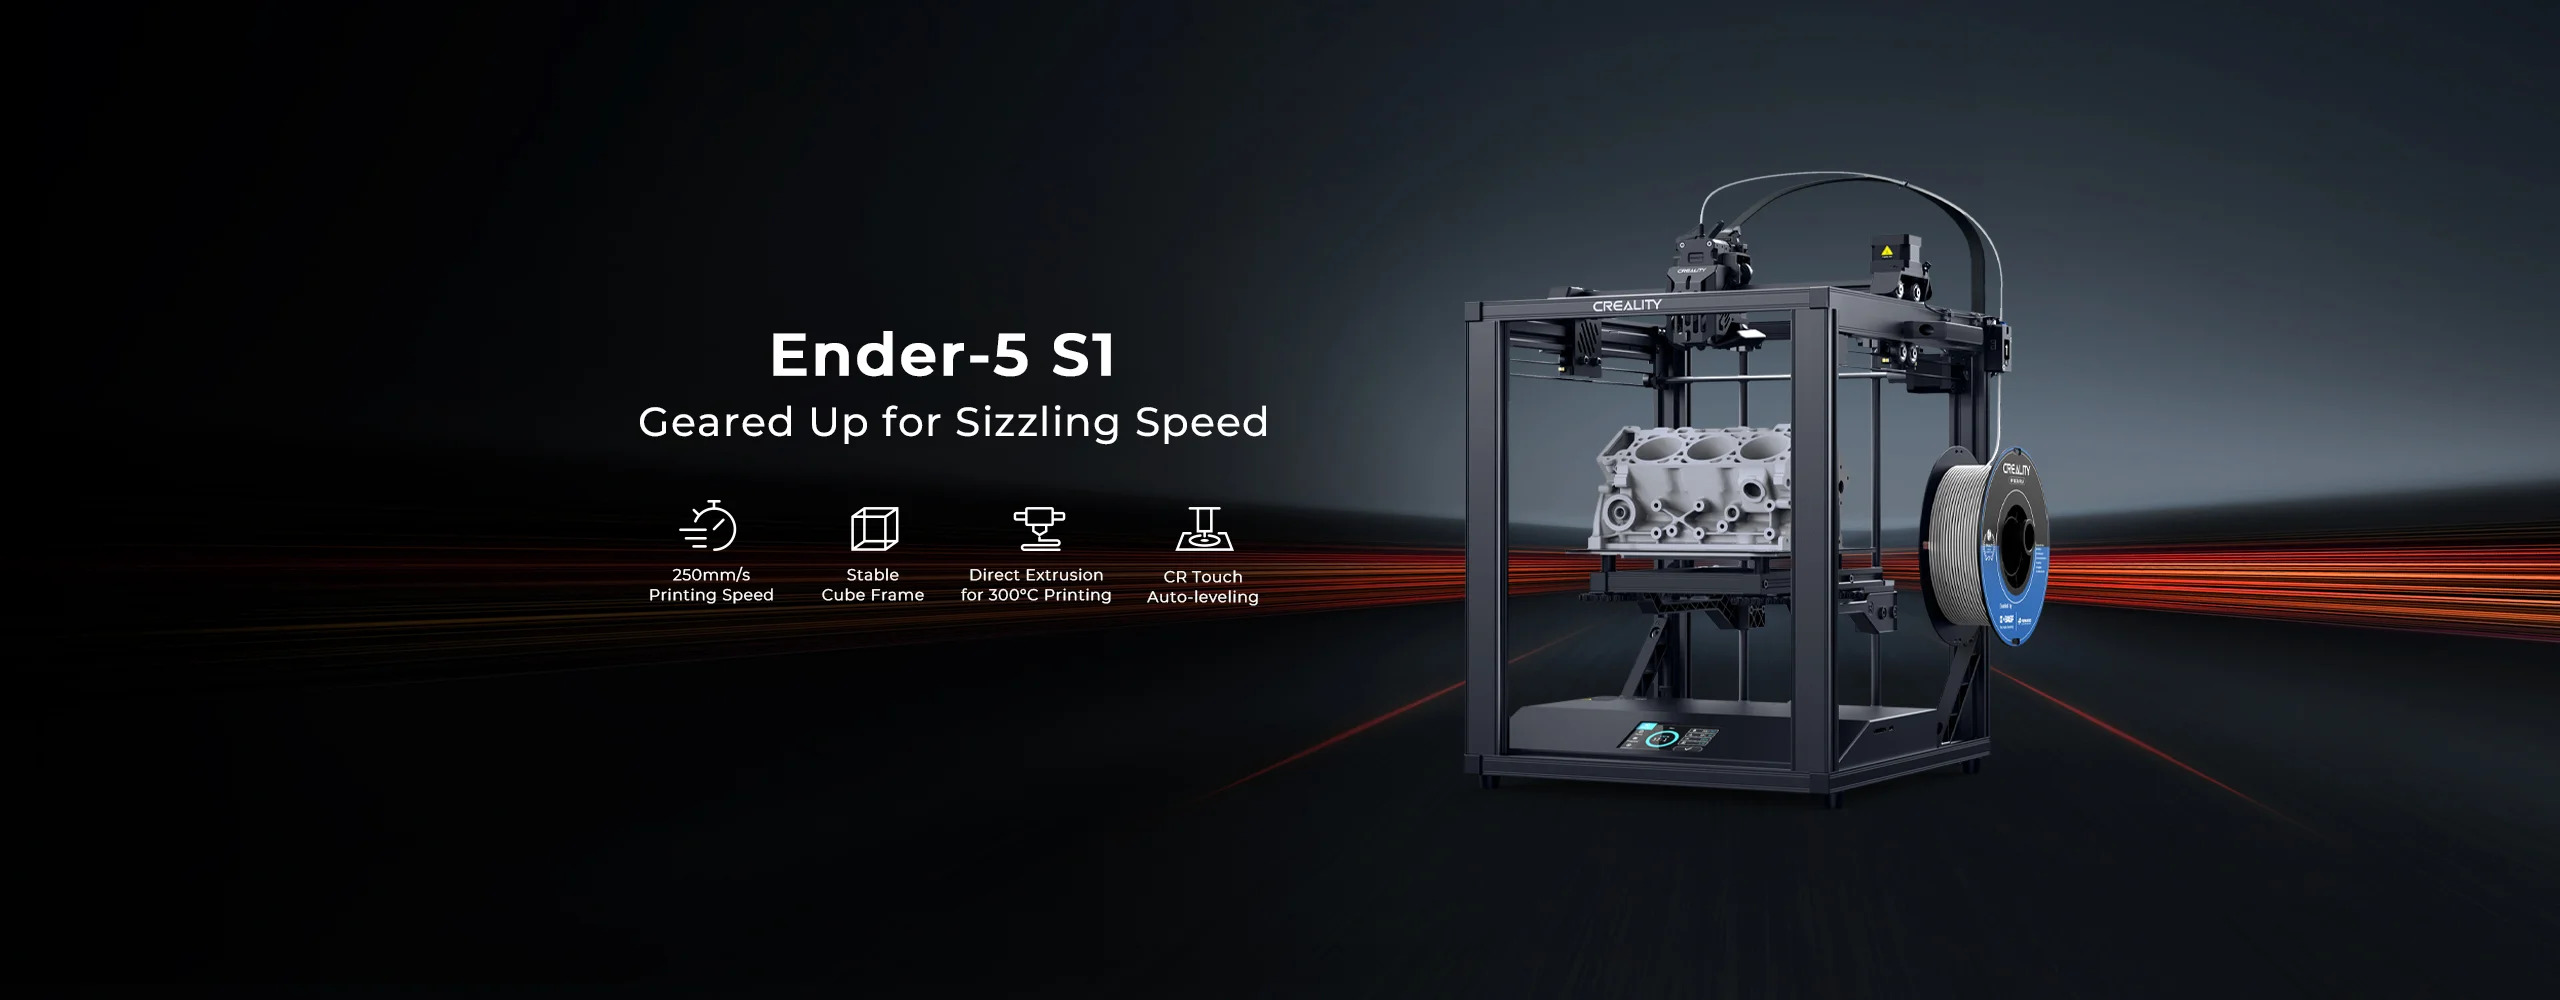 Ender-5 S1